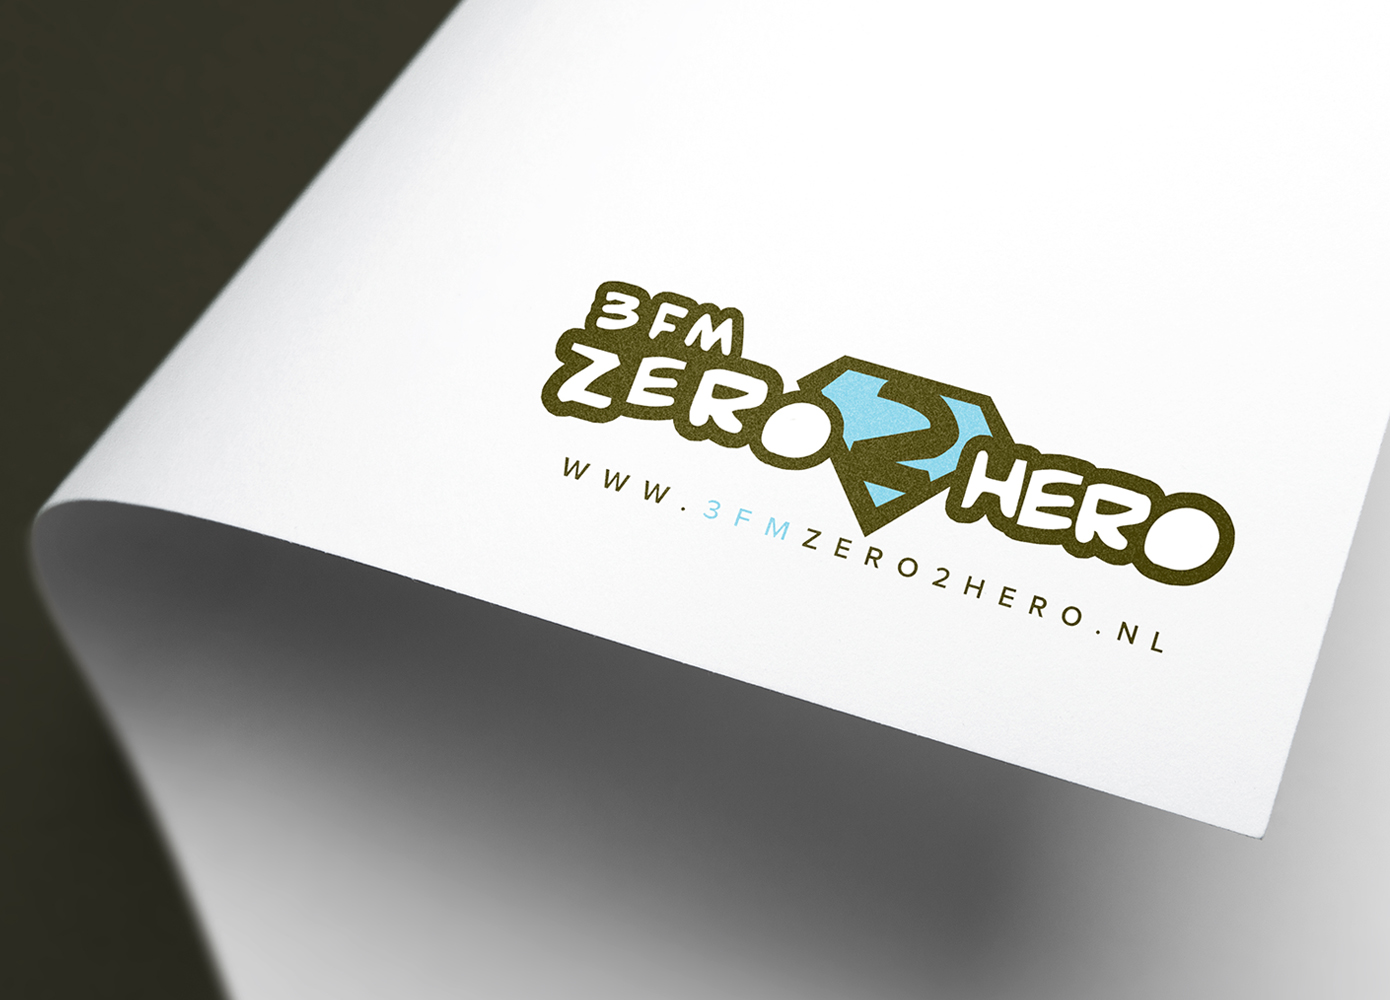 Logo ontwerp 3FM Zero 2 Hero